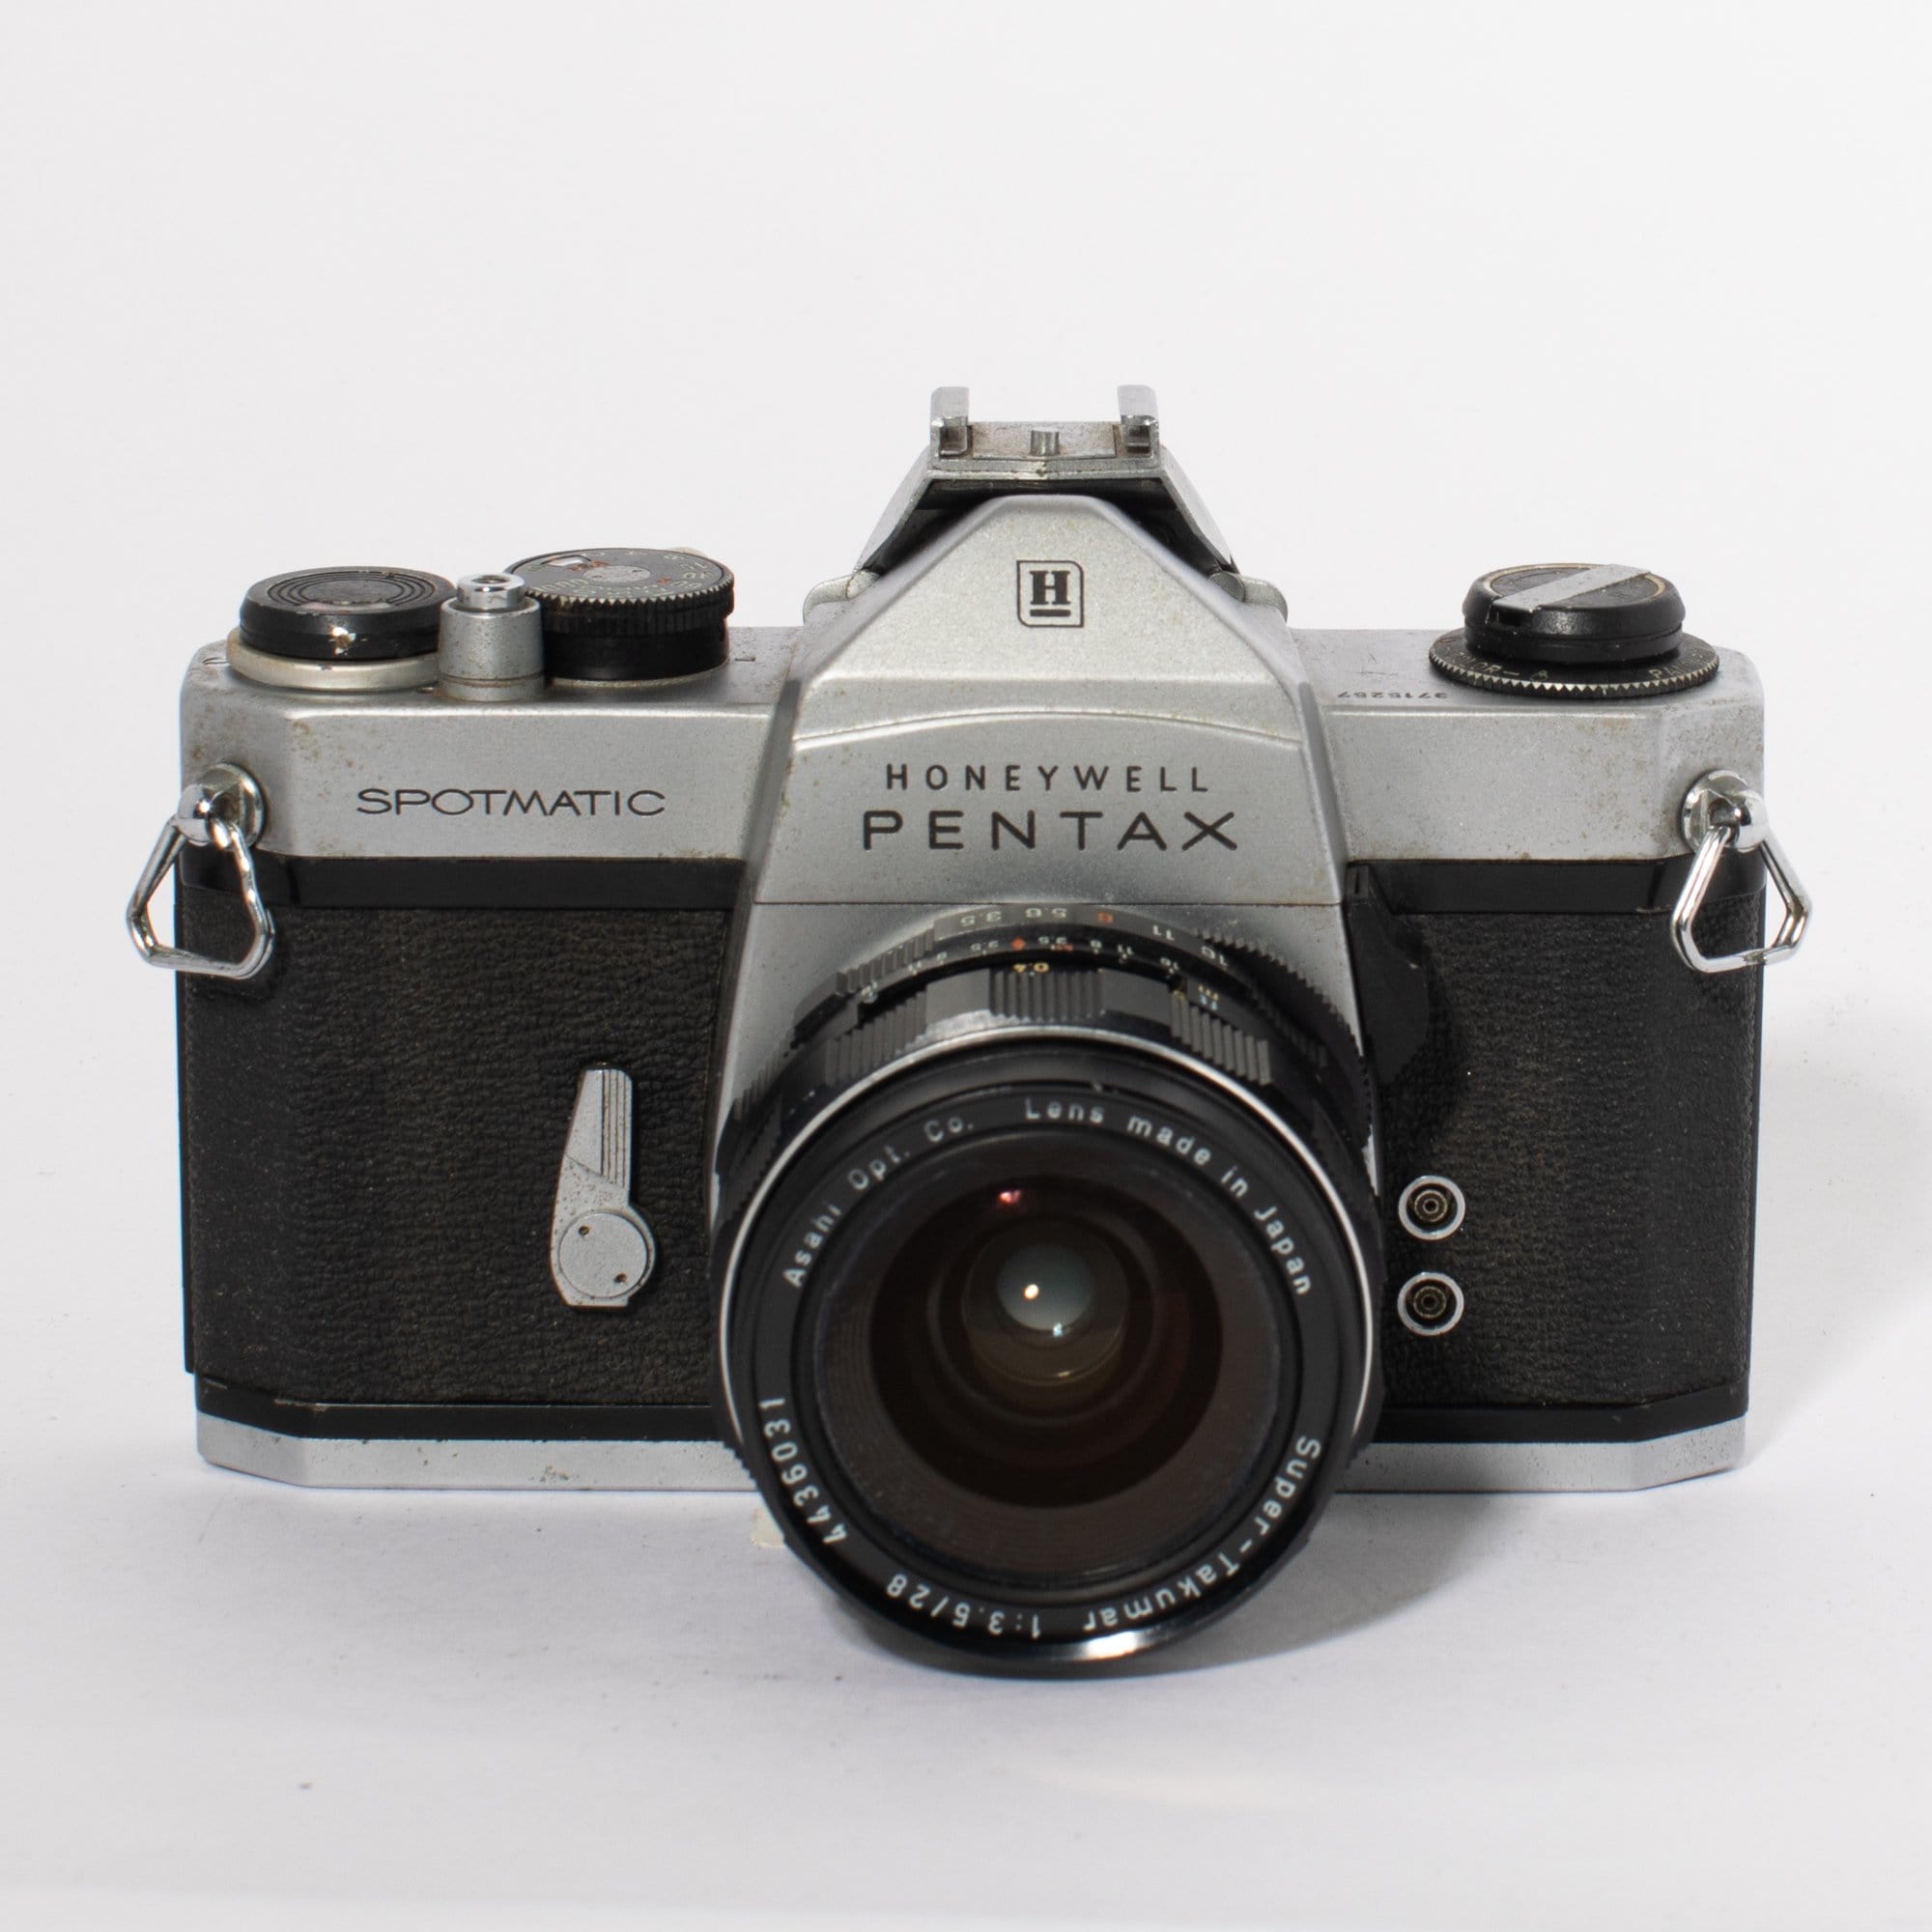 Honeywell Pentax Spotmatic (28mm and 200mm Kit) - FRESH CLA – Film